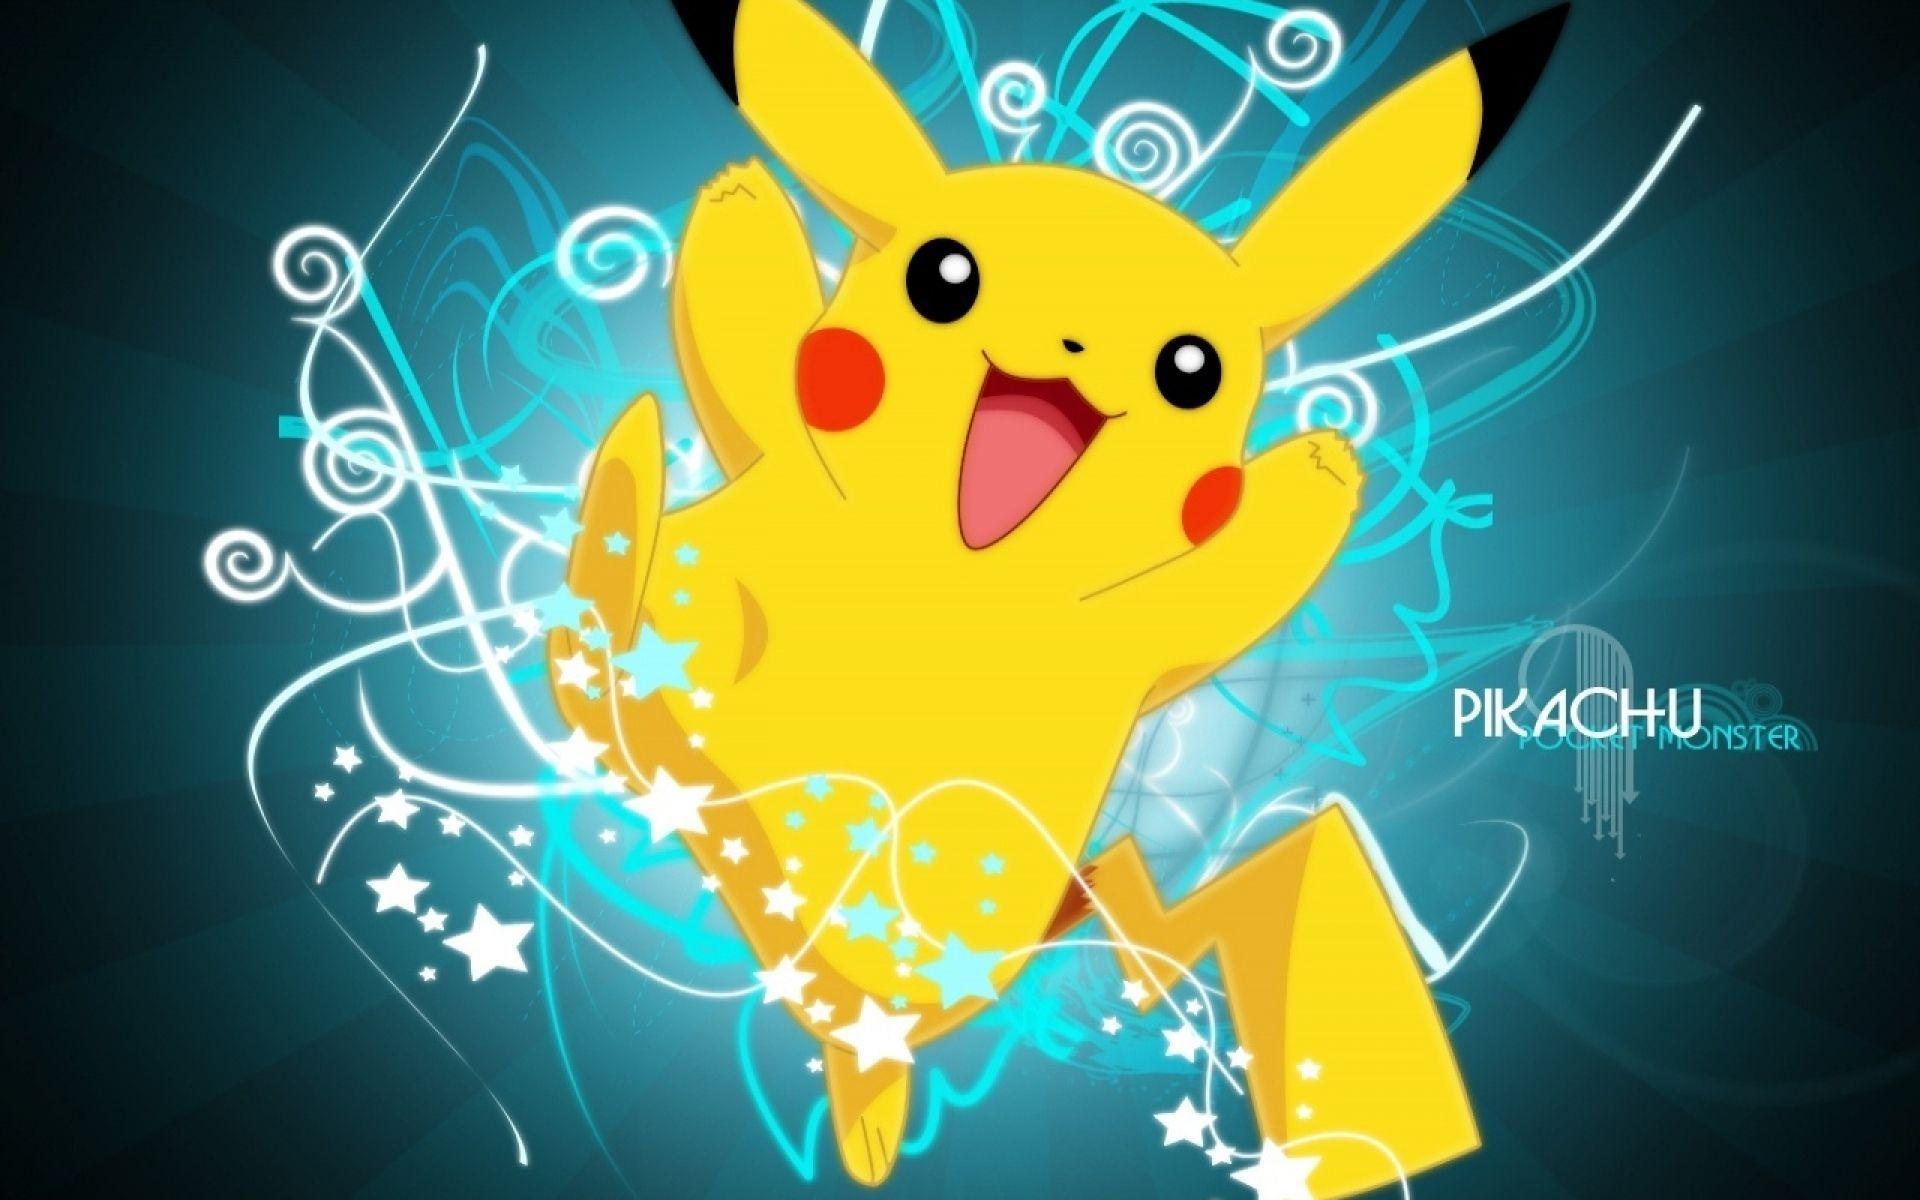 yellow cute pokemon image